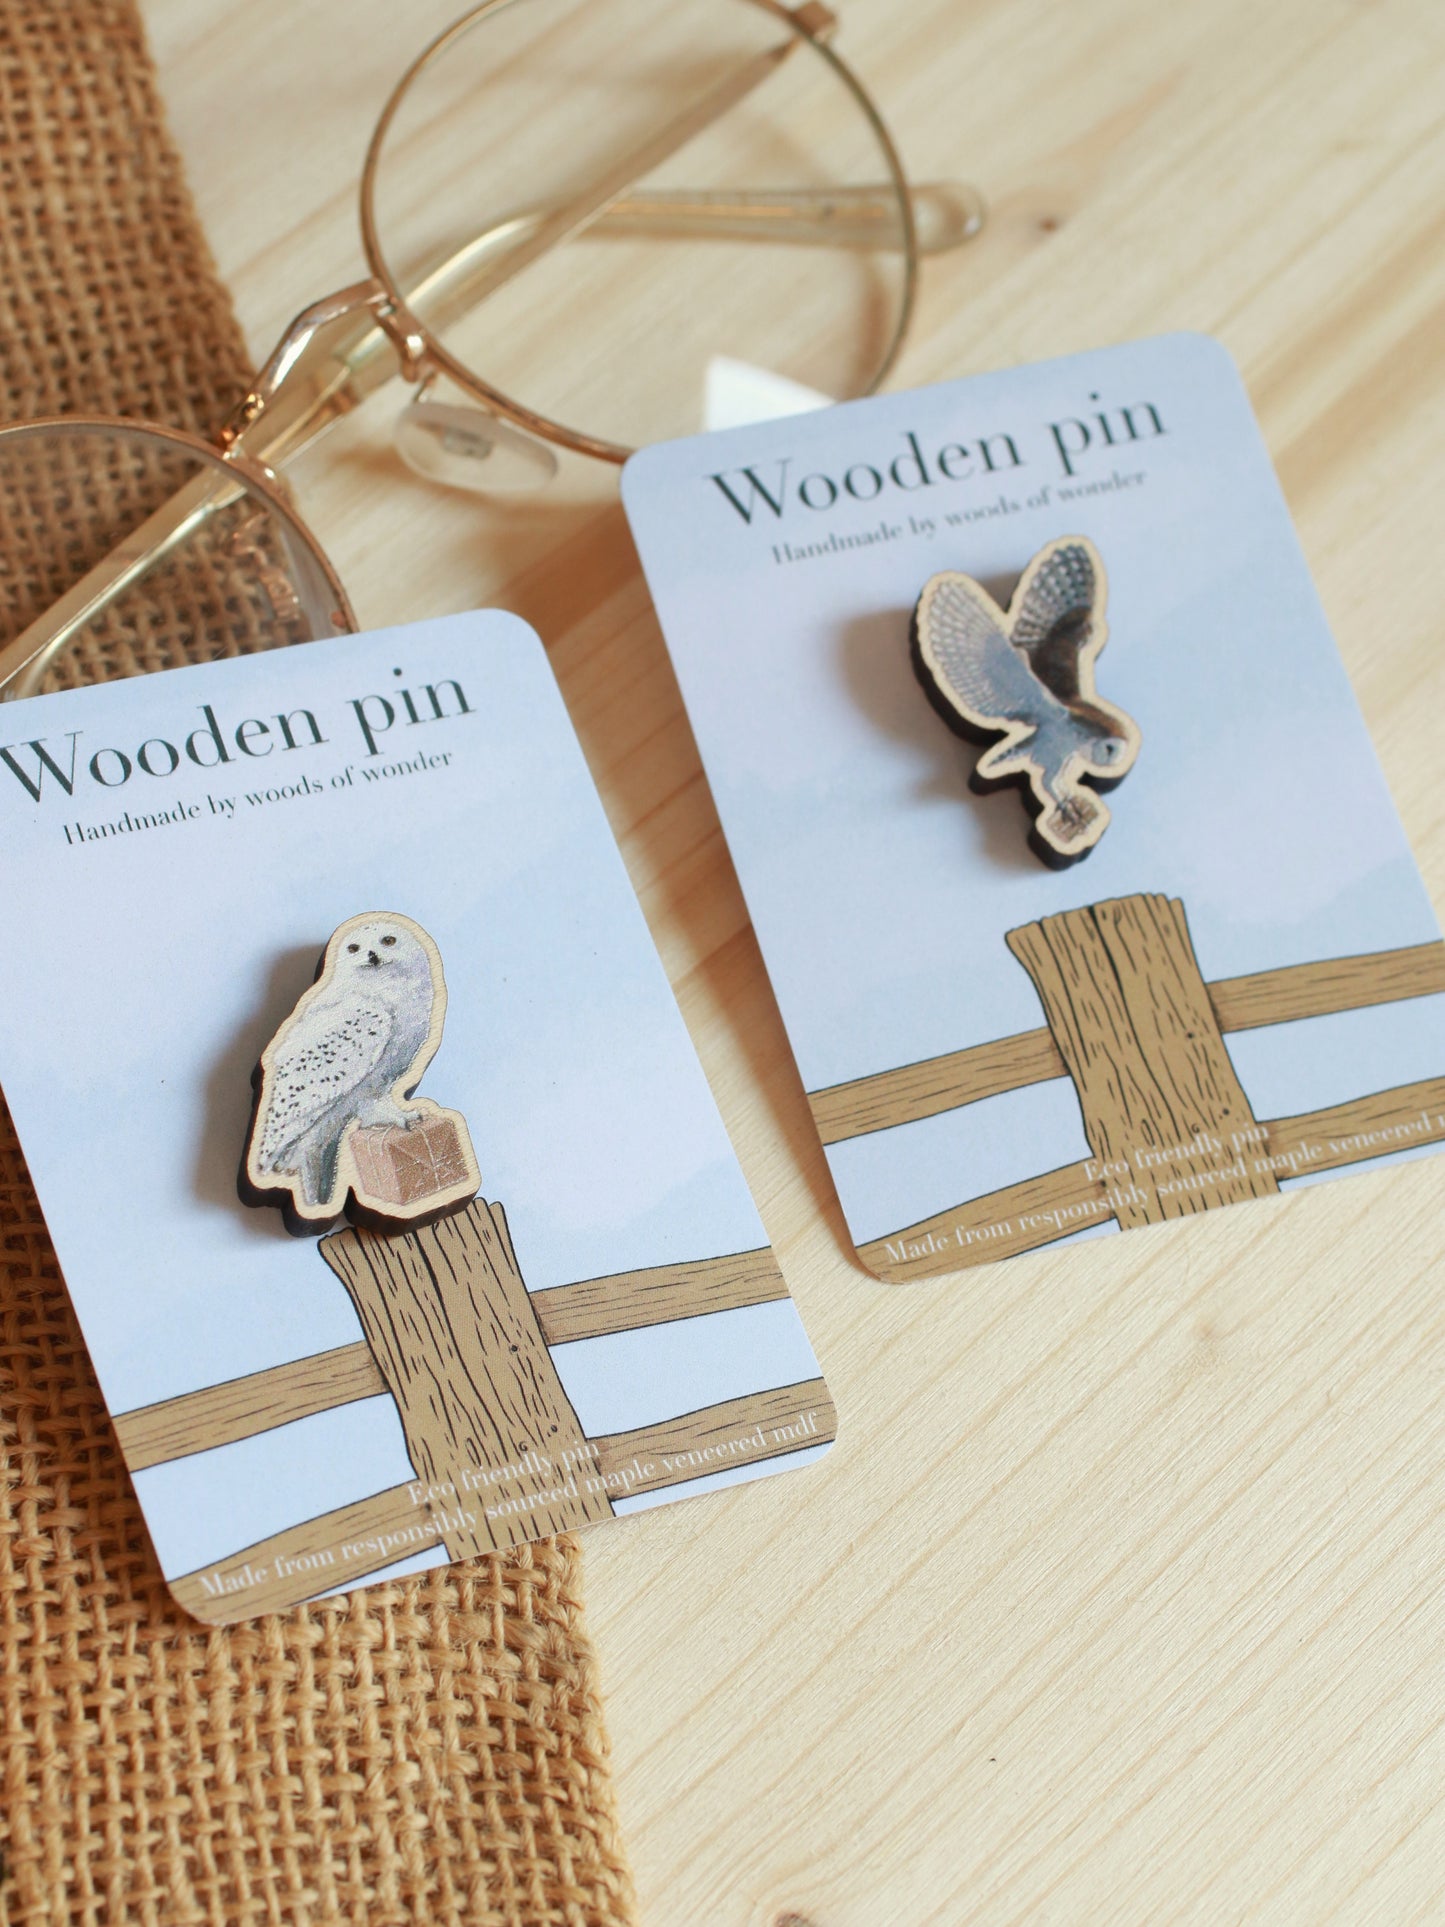 Wooden barn owl pin